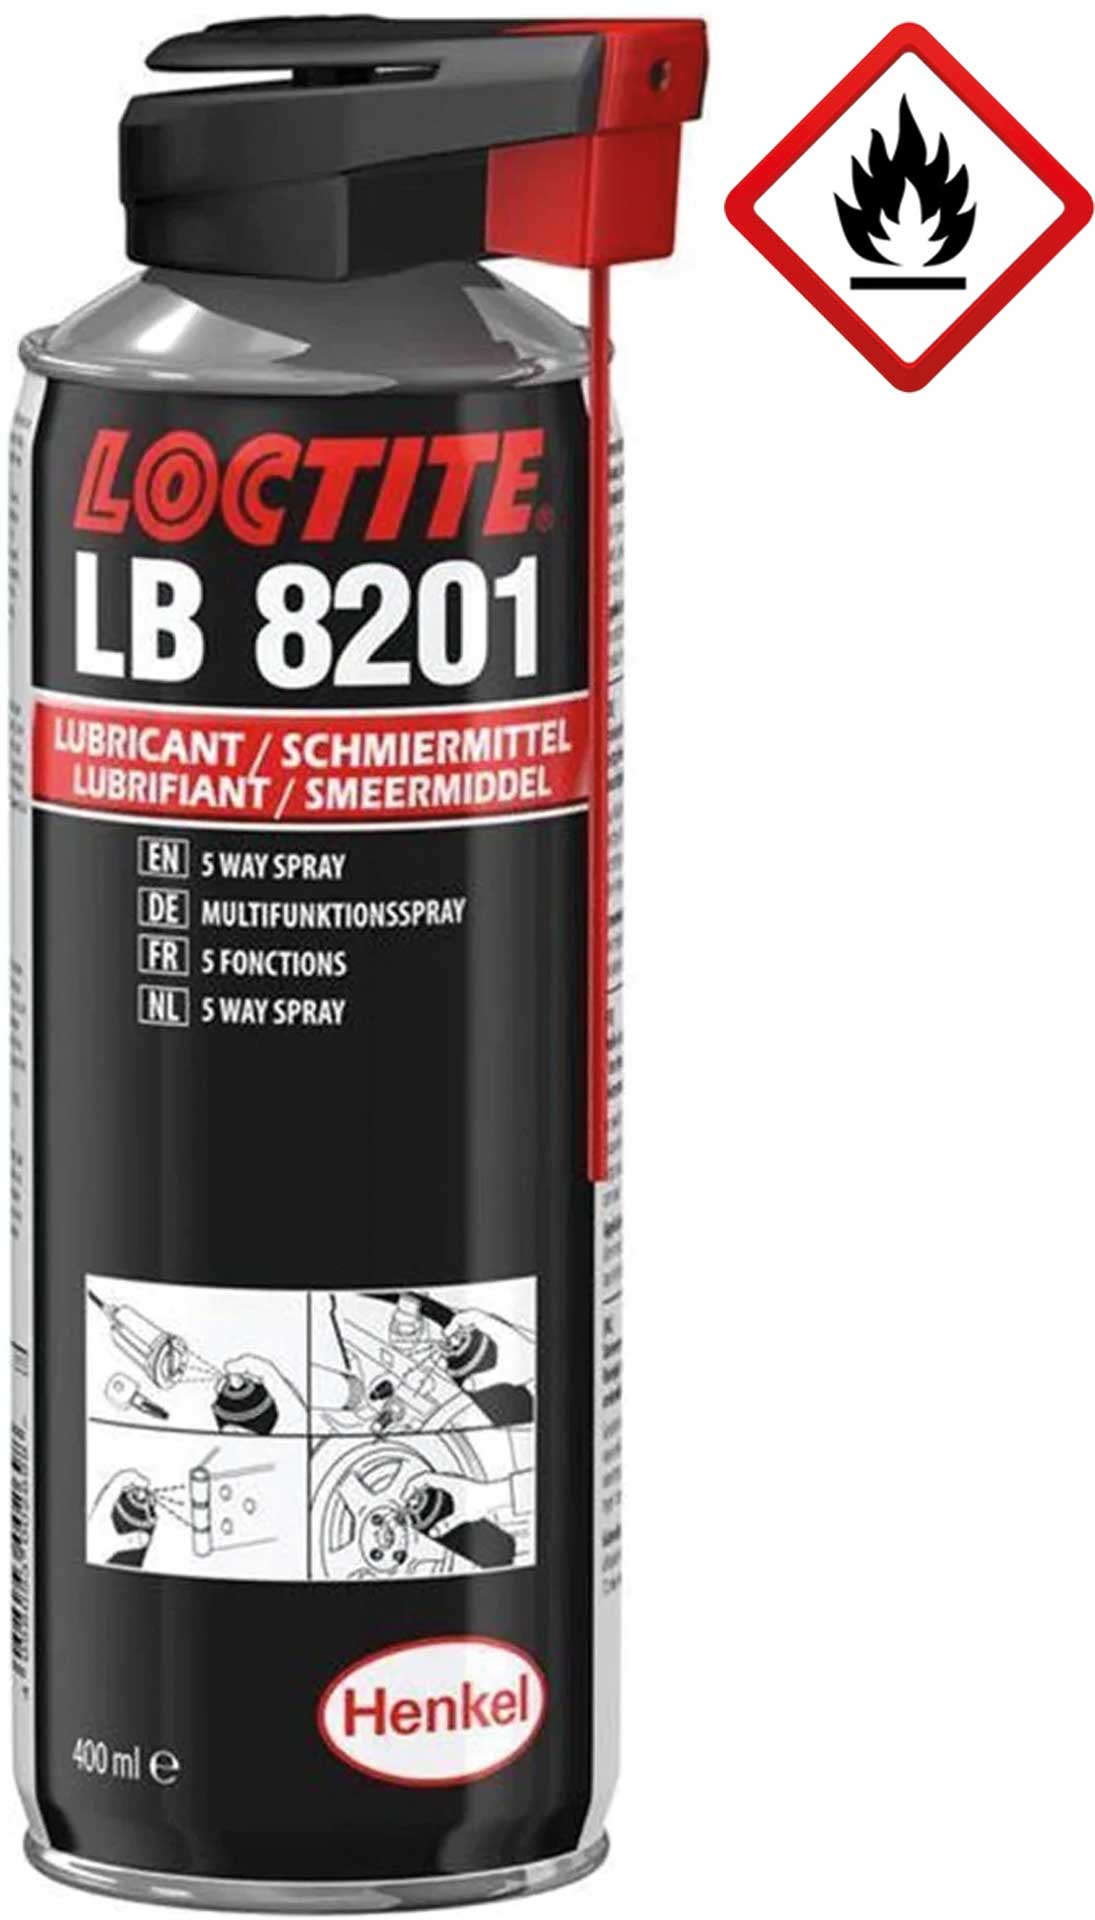 LOCTITE LB 8201 5-way Spray 400ml Kriechöl Schmiermittel